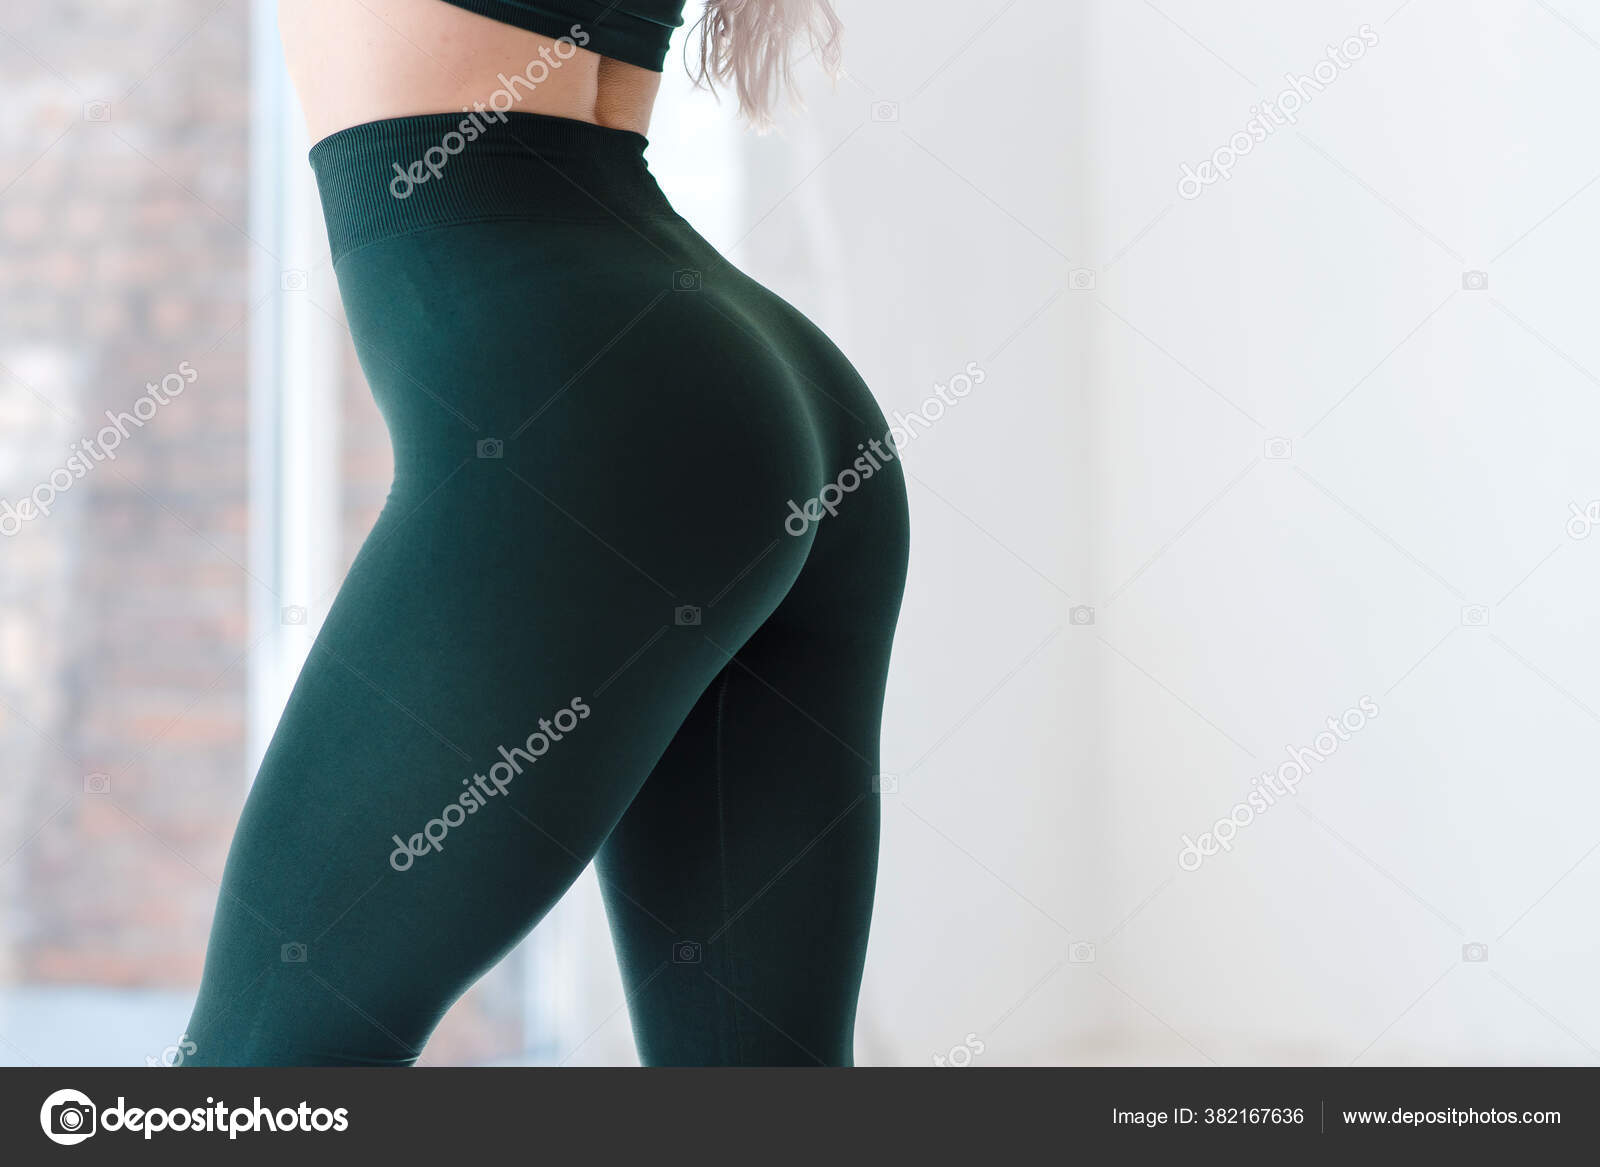 Nice Round Ass Pics